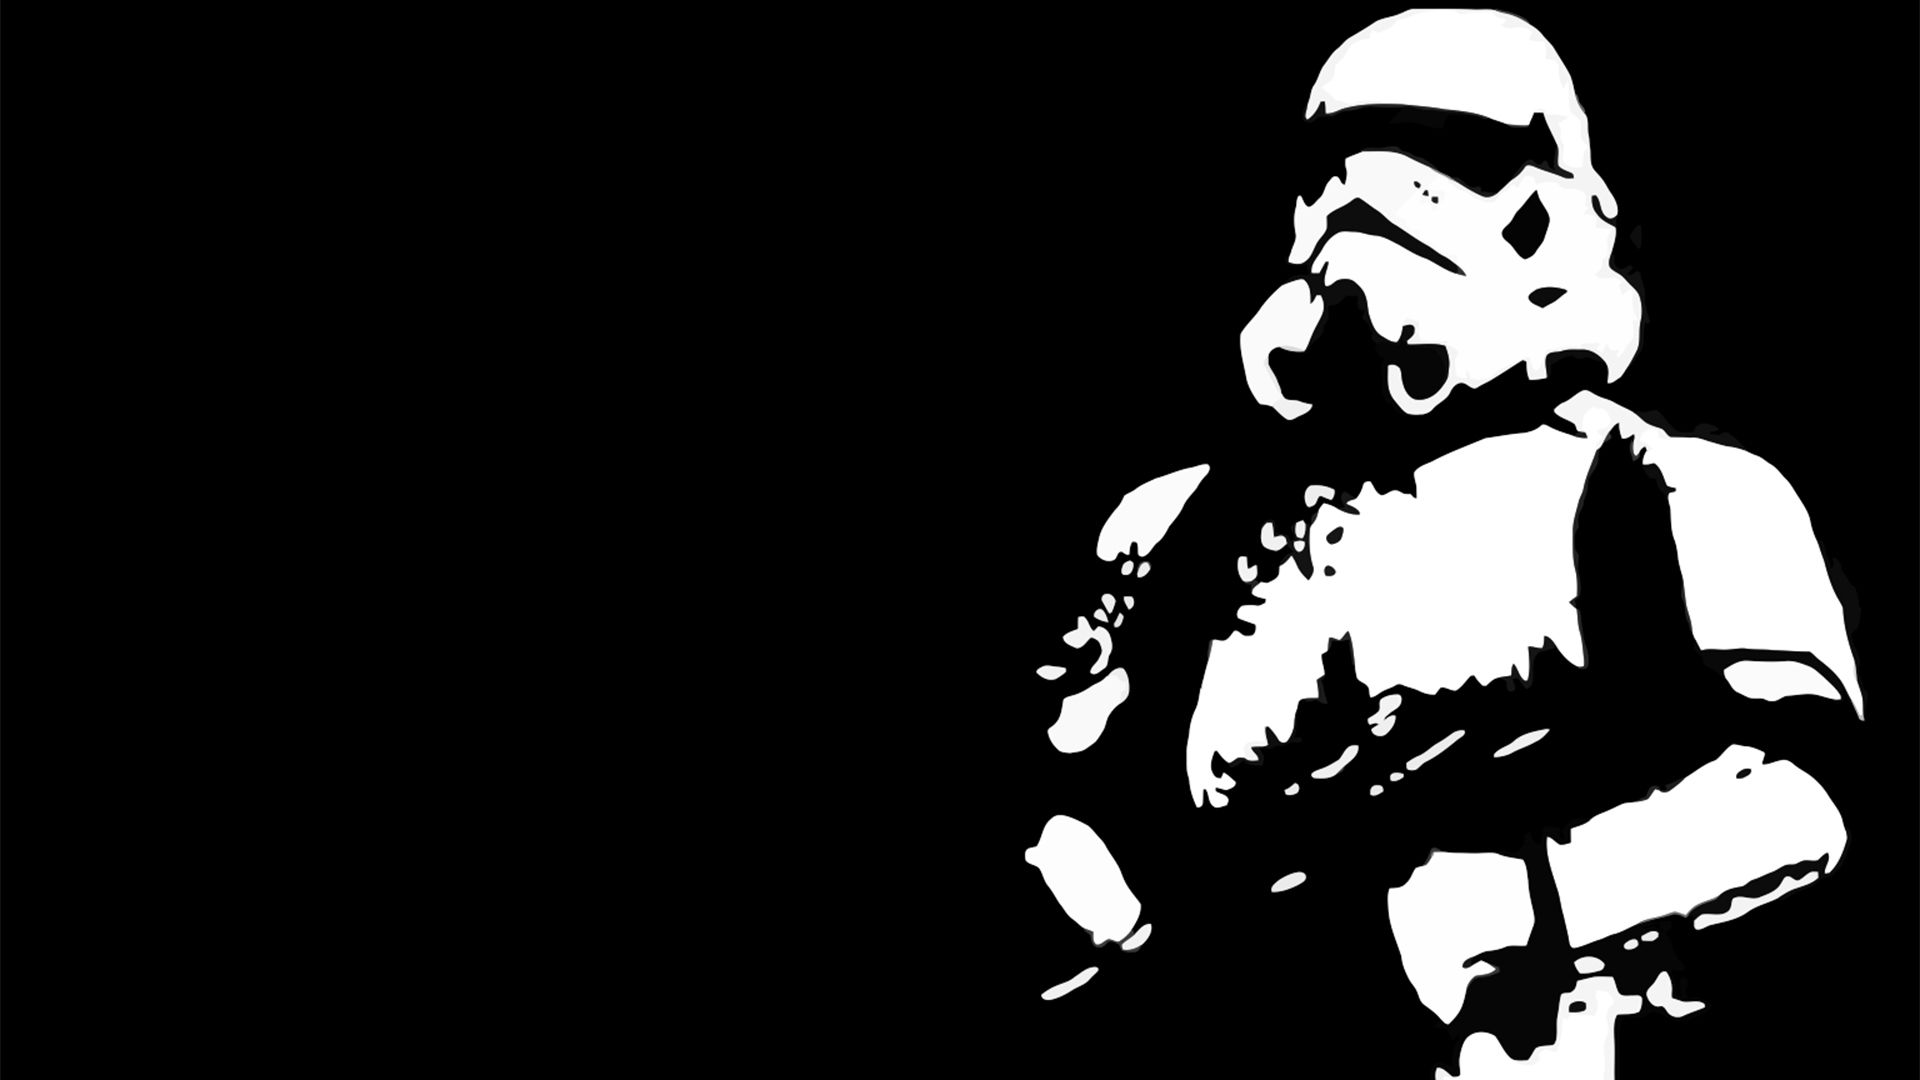 Star Wars Stormtrooper Wallpaper High Resolution Full Size